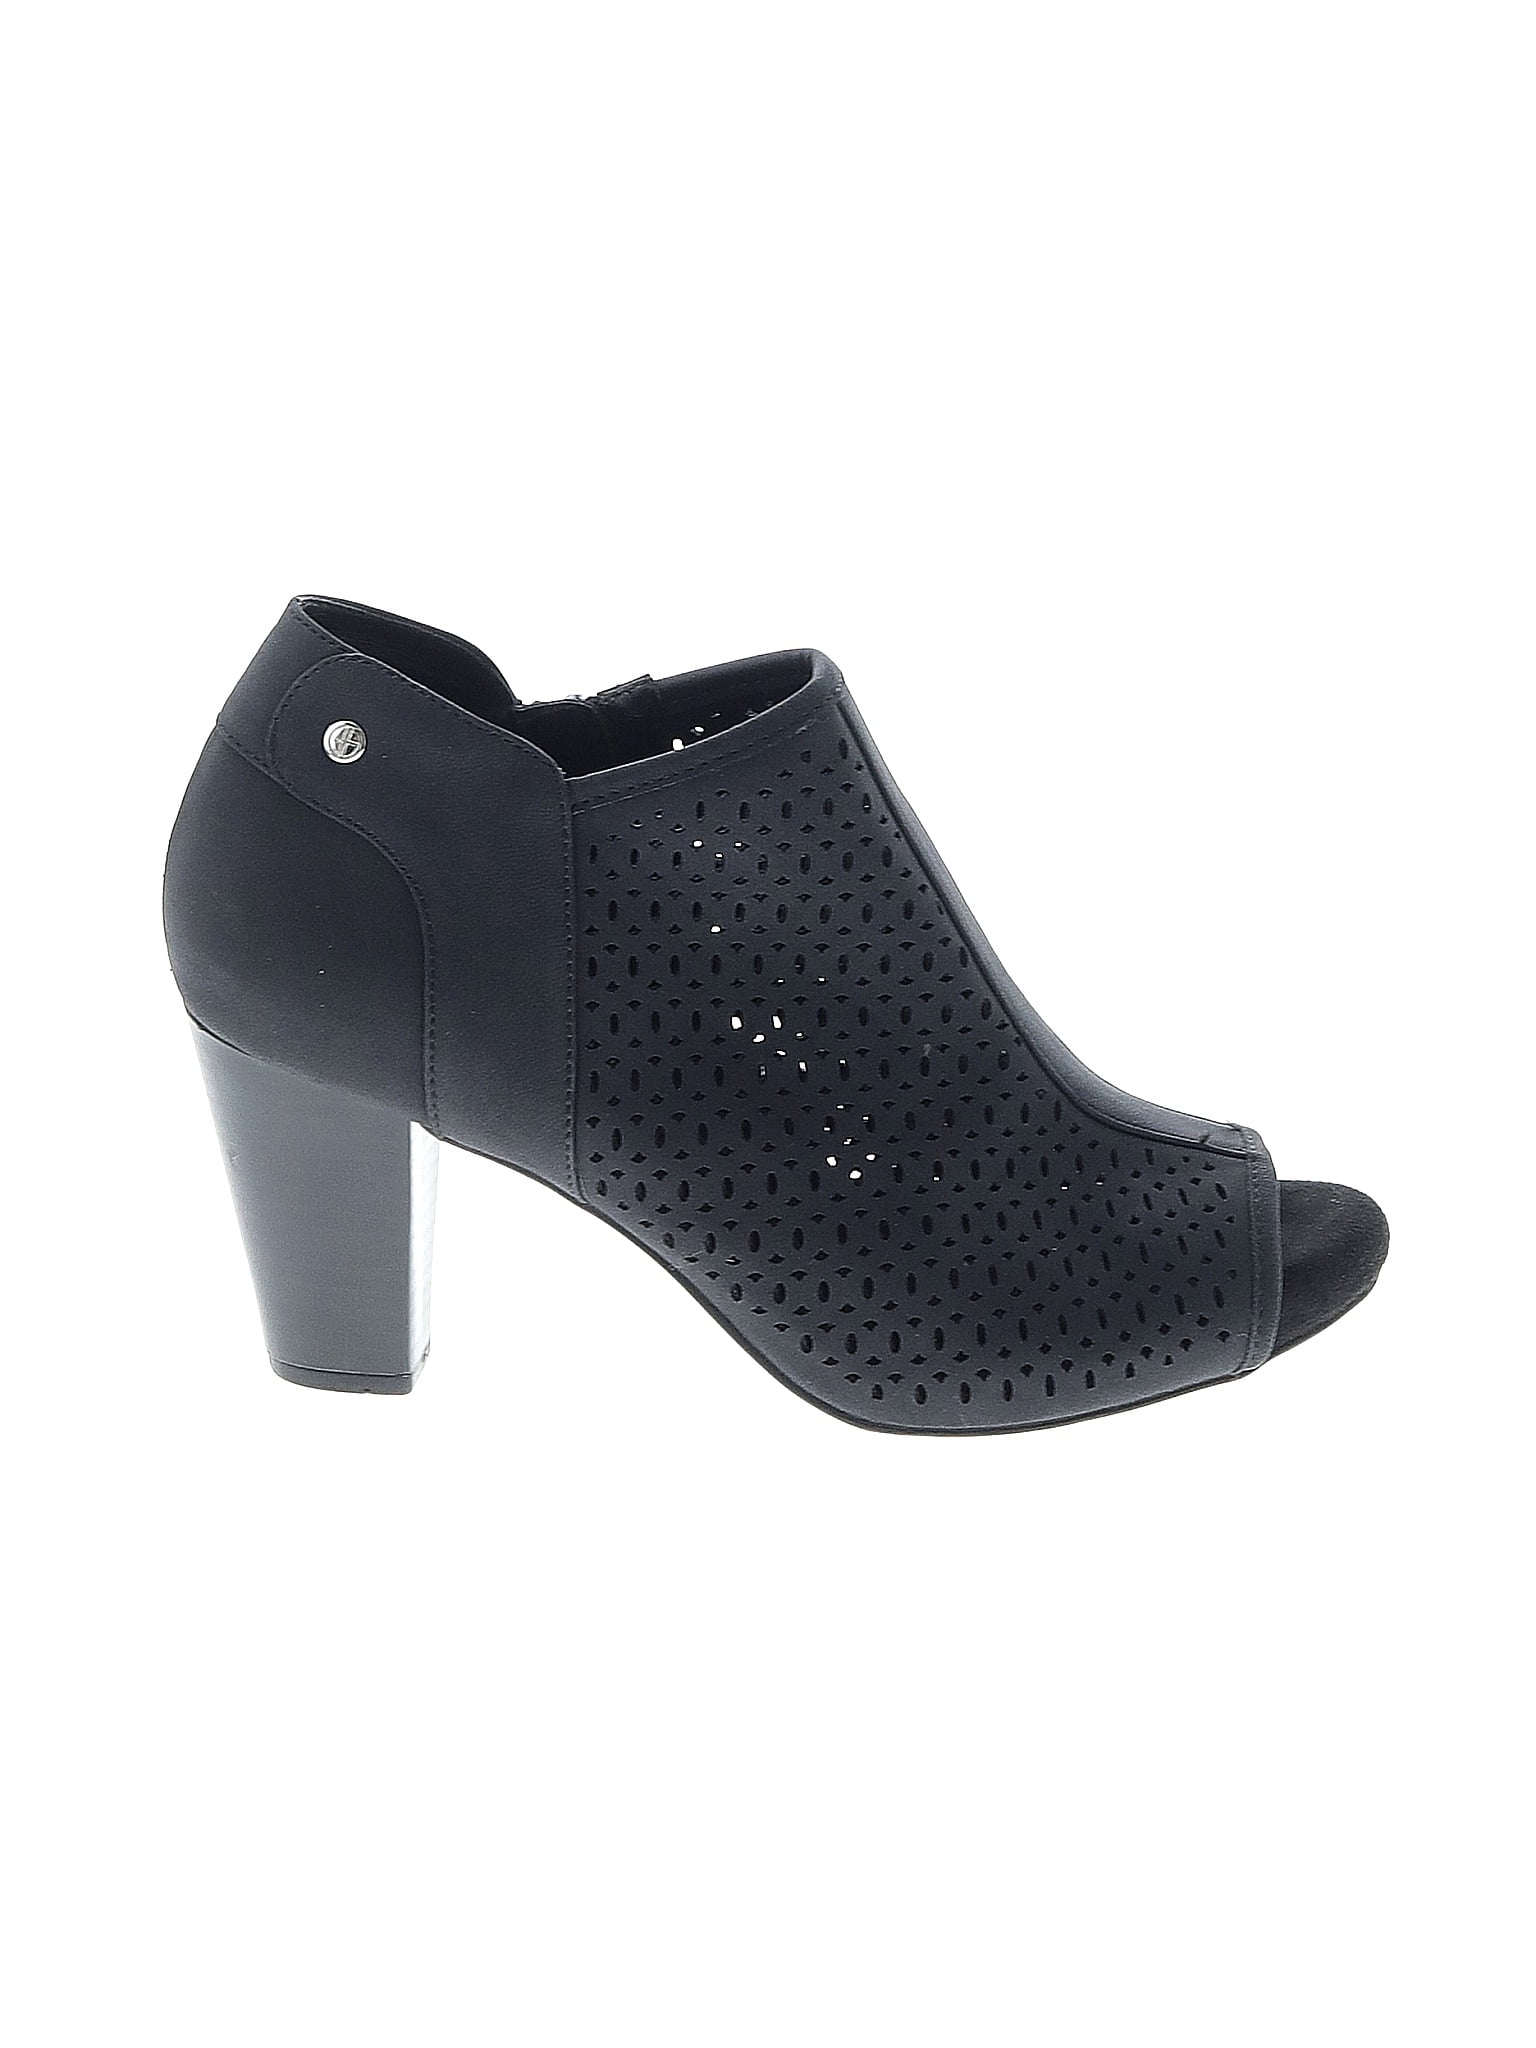 Giani Bernini Black Ankle Boots Size 8 1/2 - 64% off | thredUP